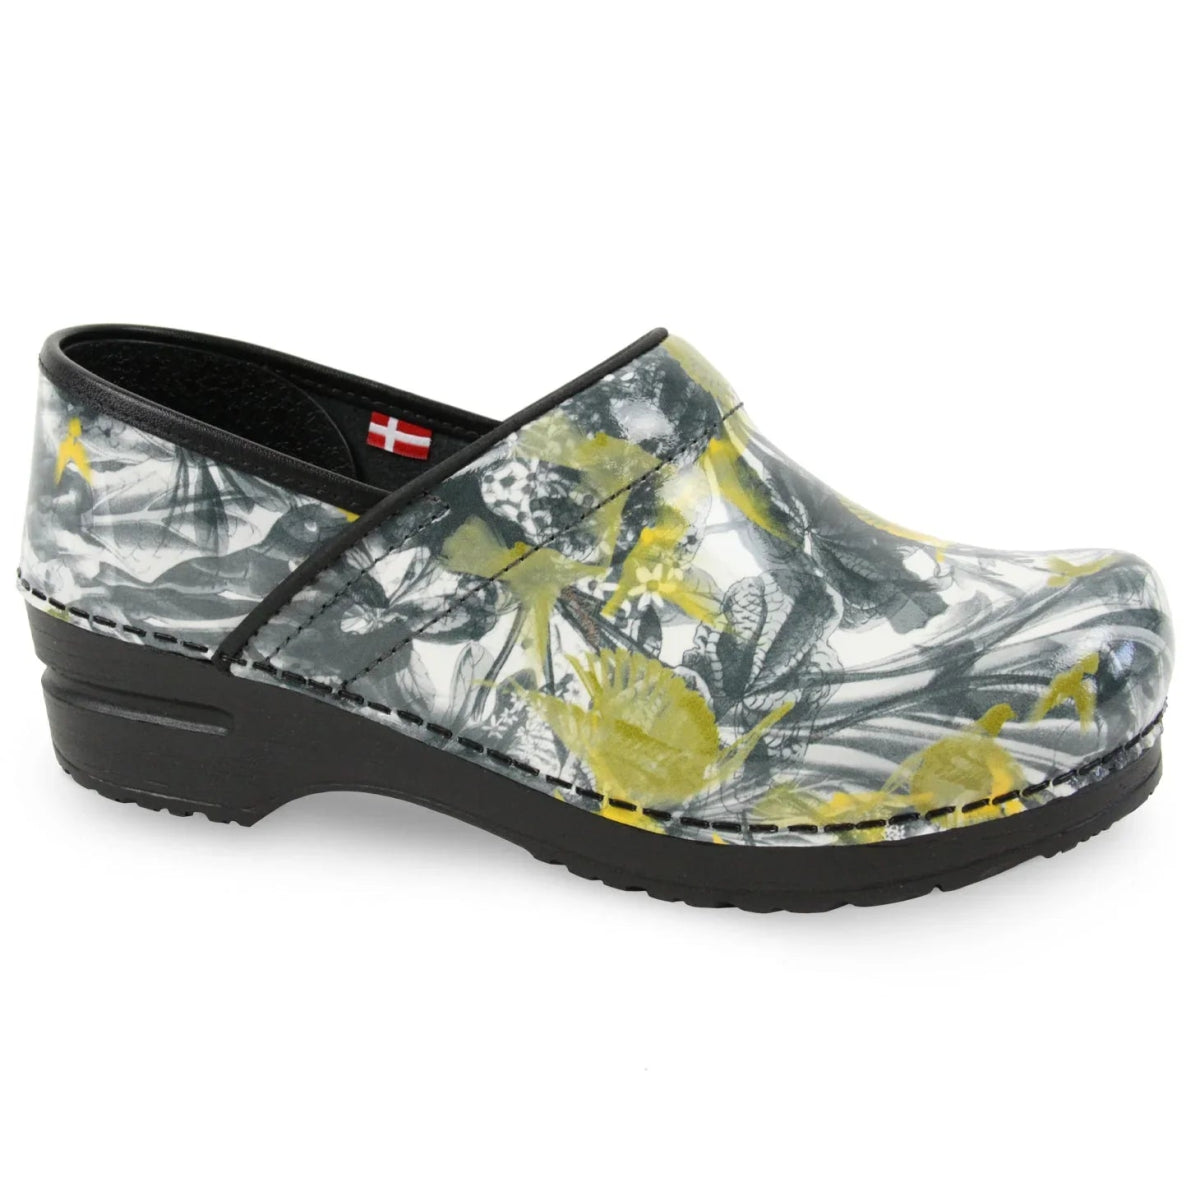 SANITA FLYWAY WOMEN CLOG IN YELLOW/GREY - TLW Shoes